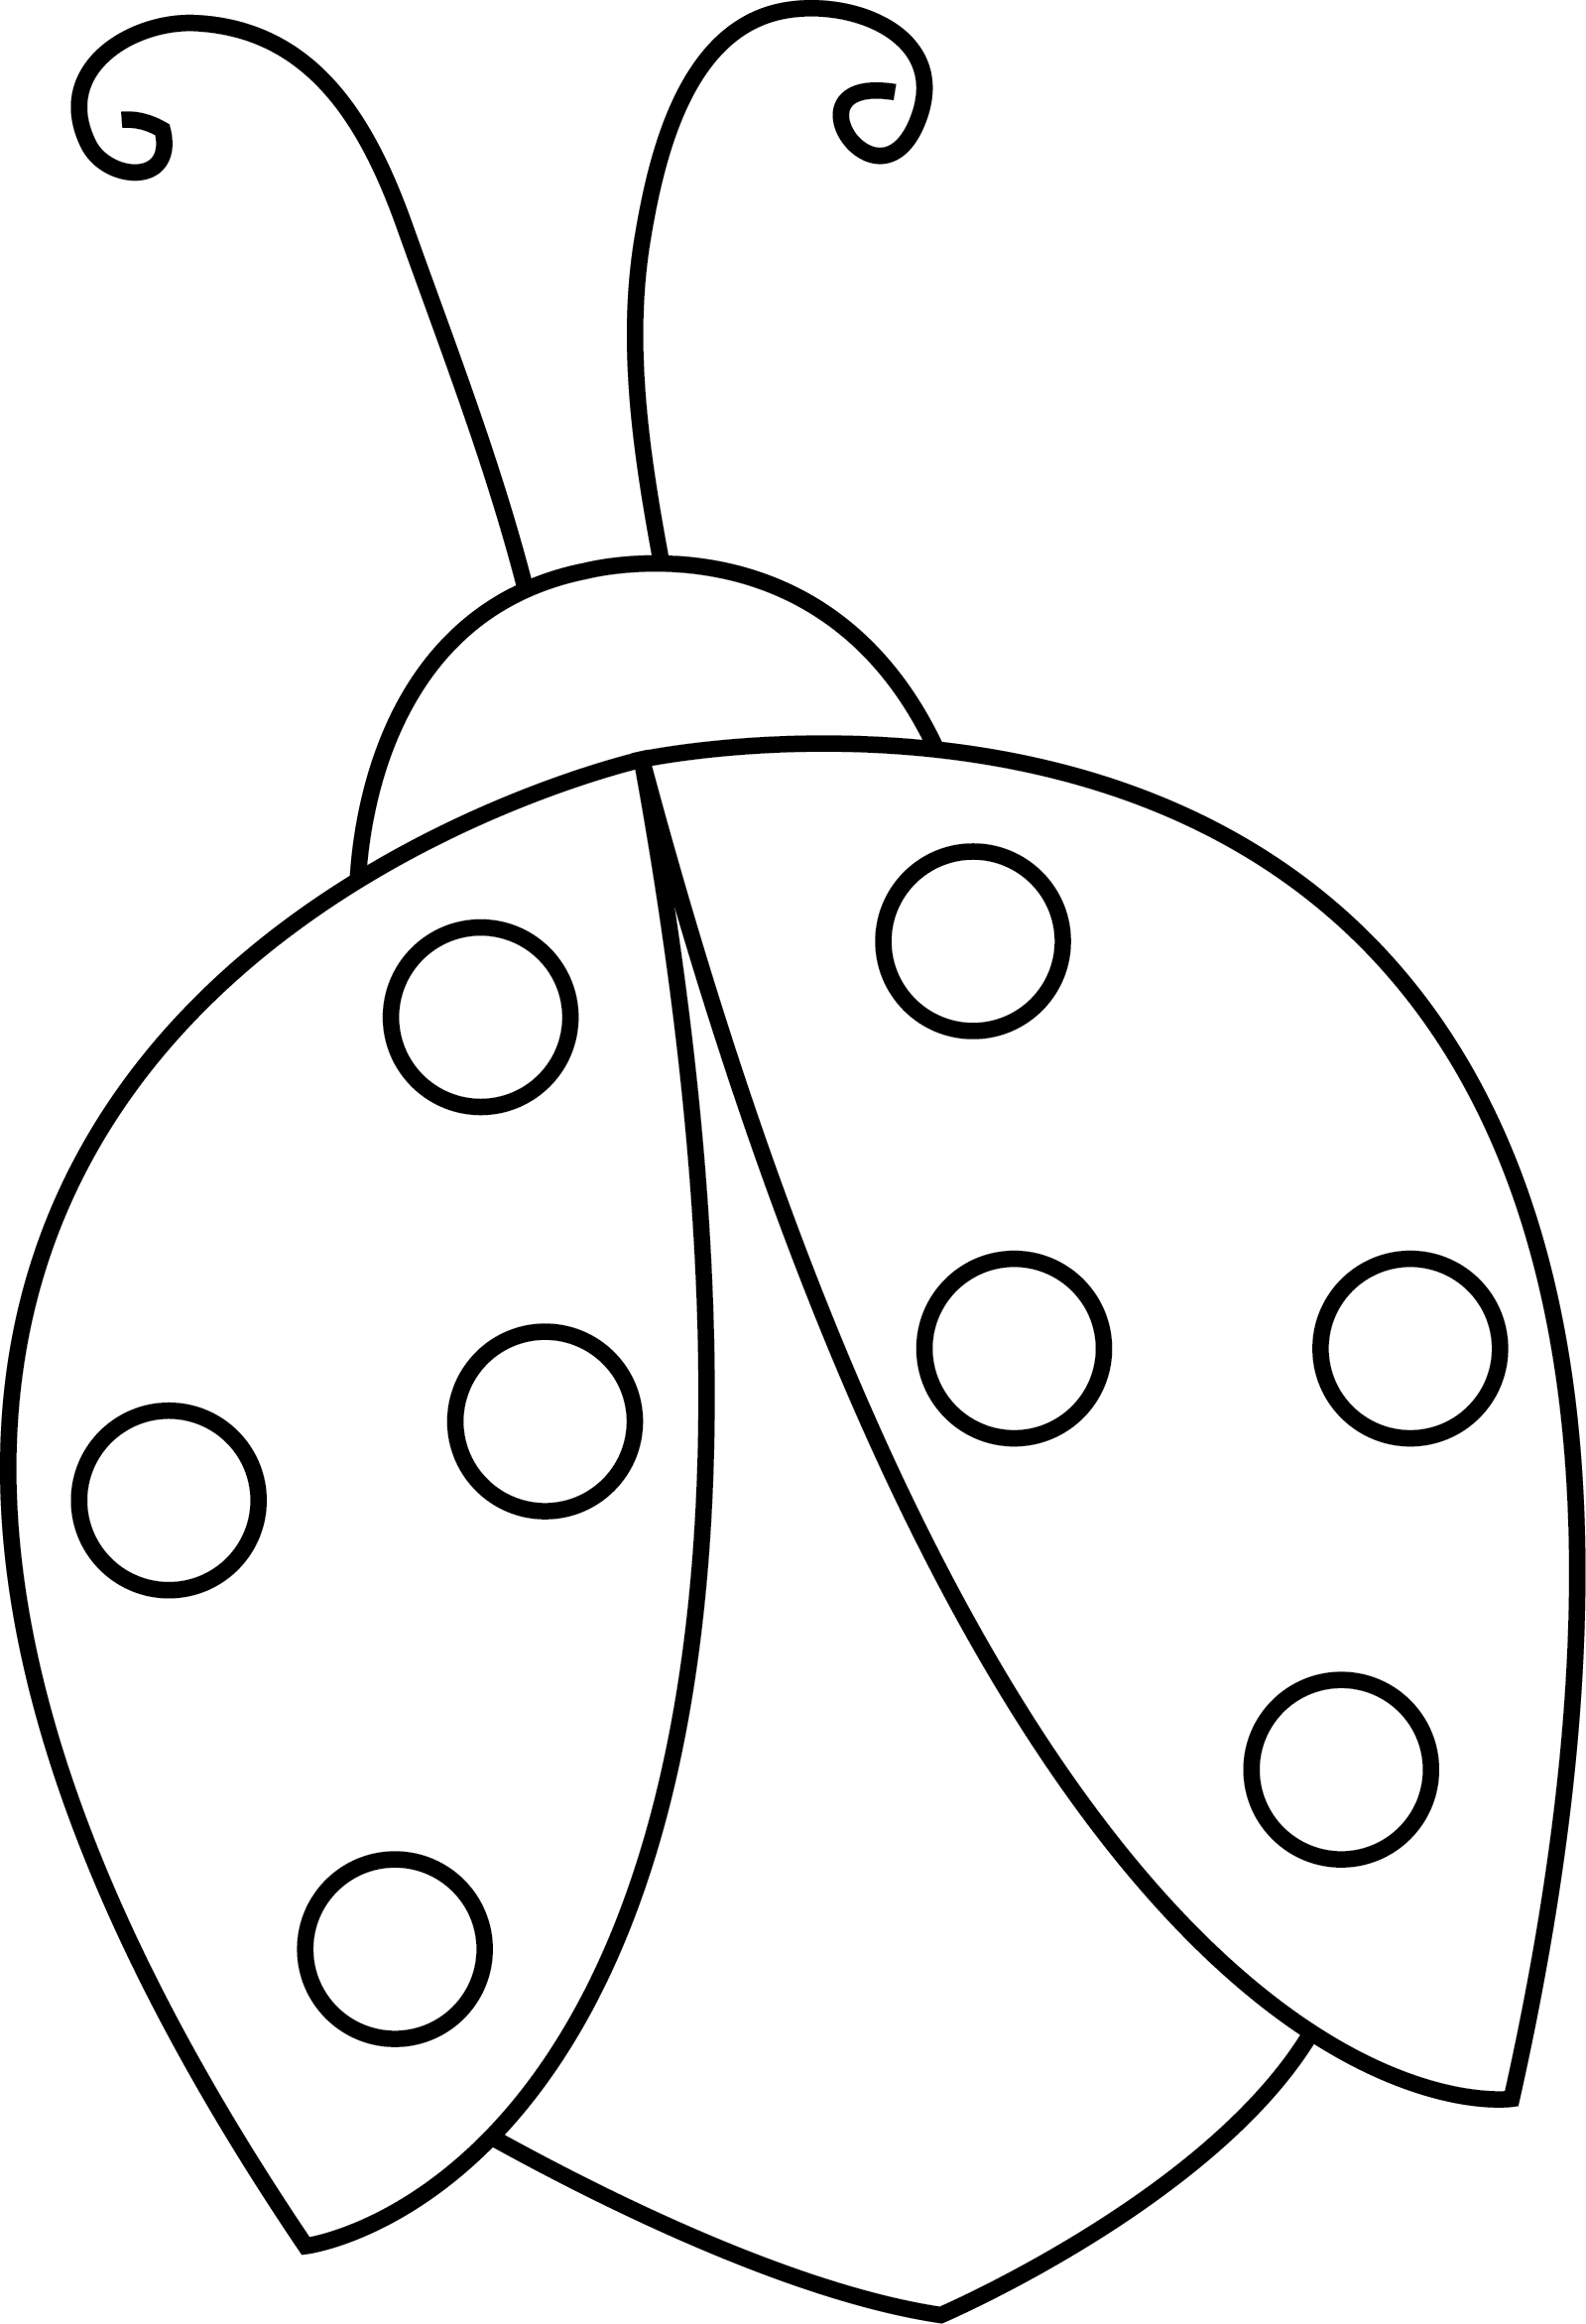 ladybird-line-drawings-clipart-best